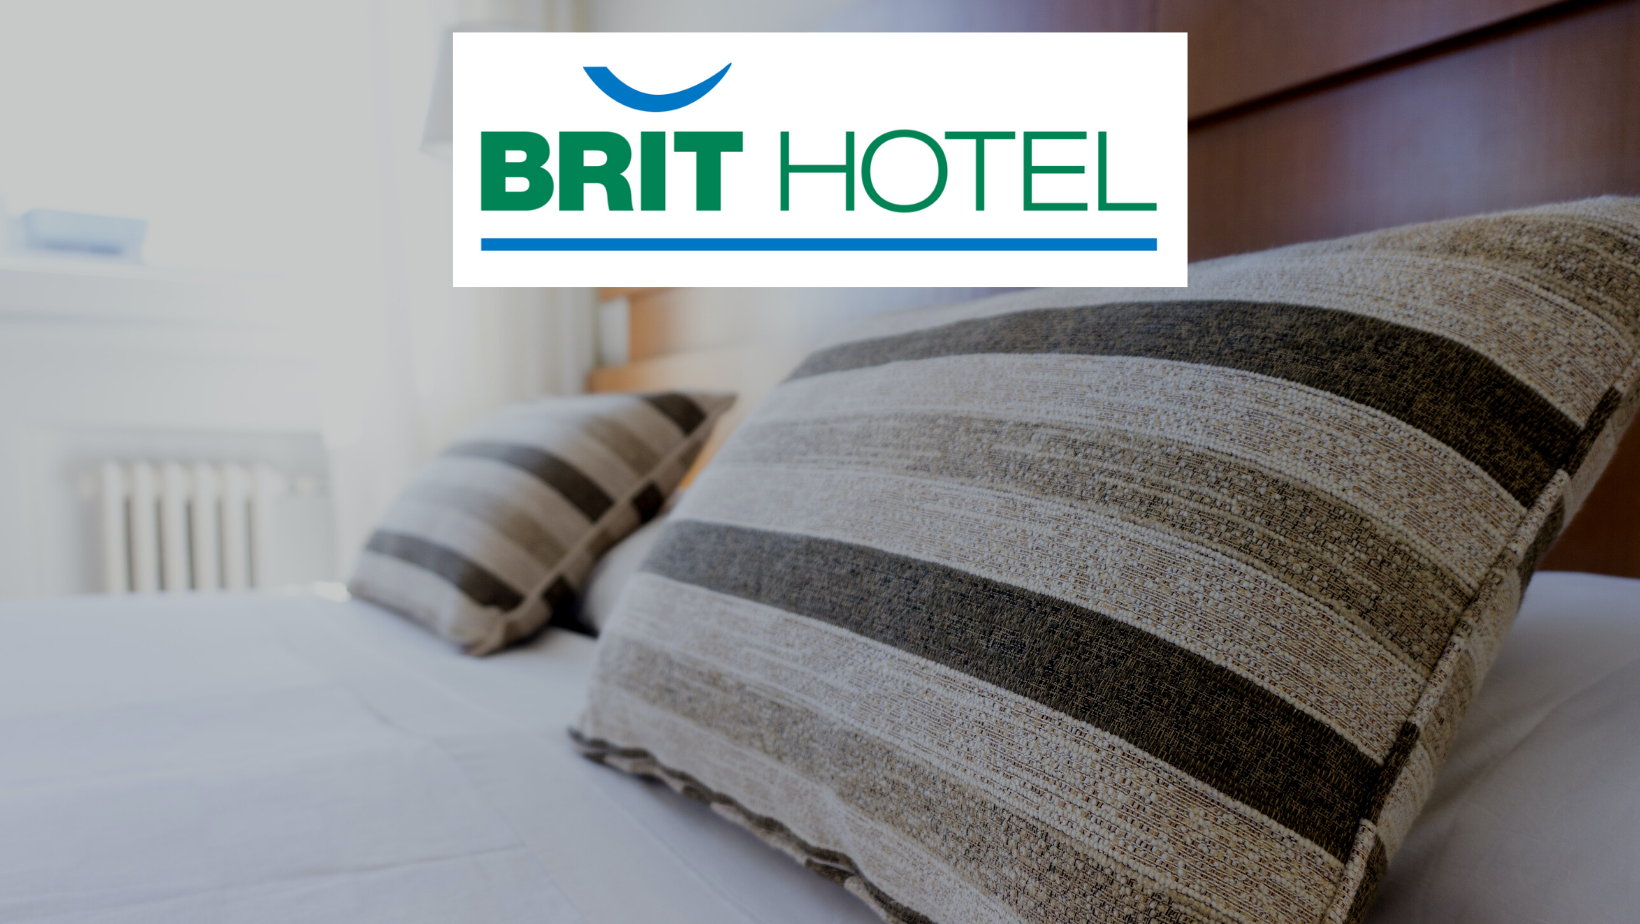 Lit hotel logo Brit hotel